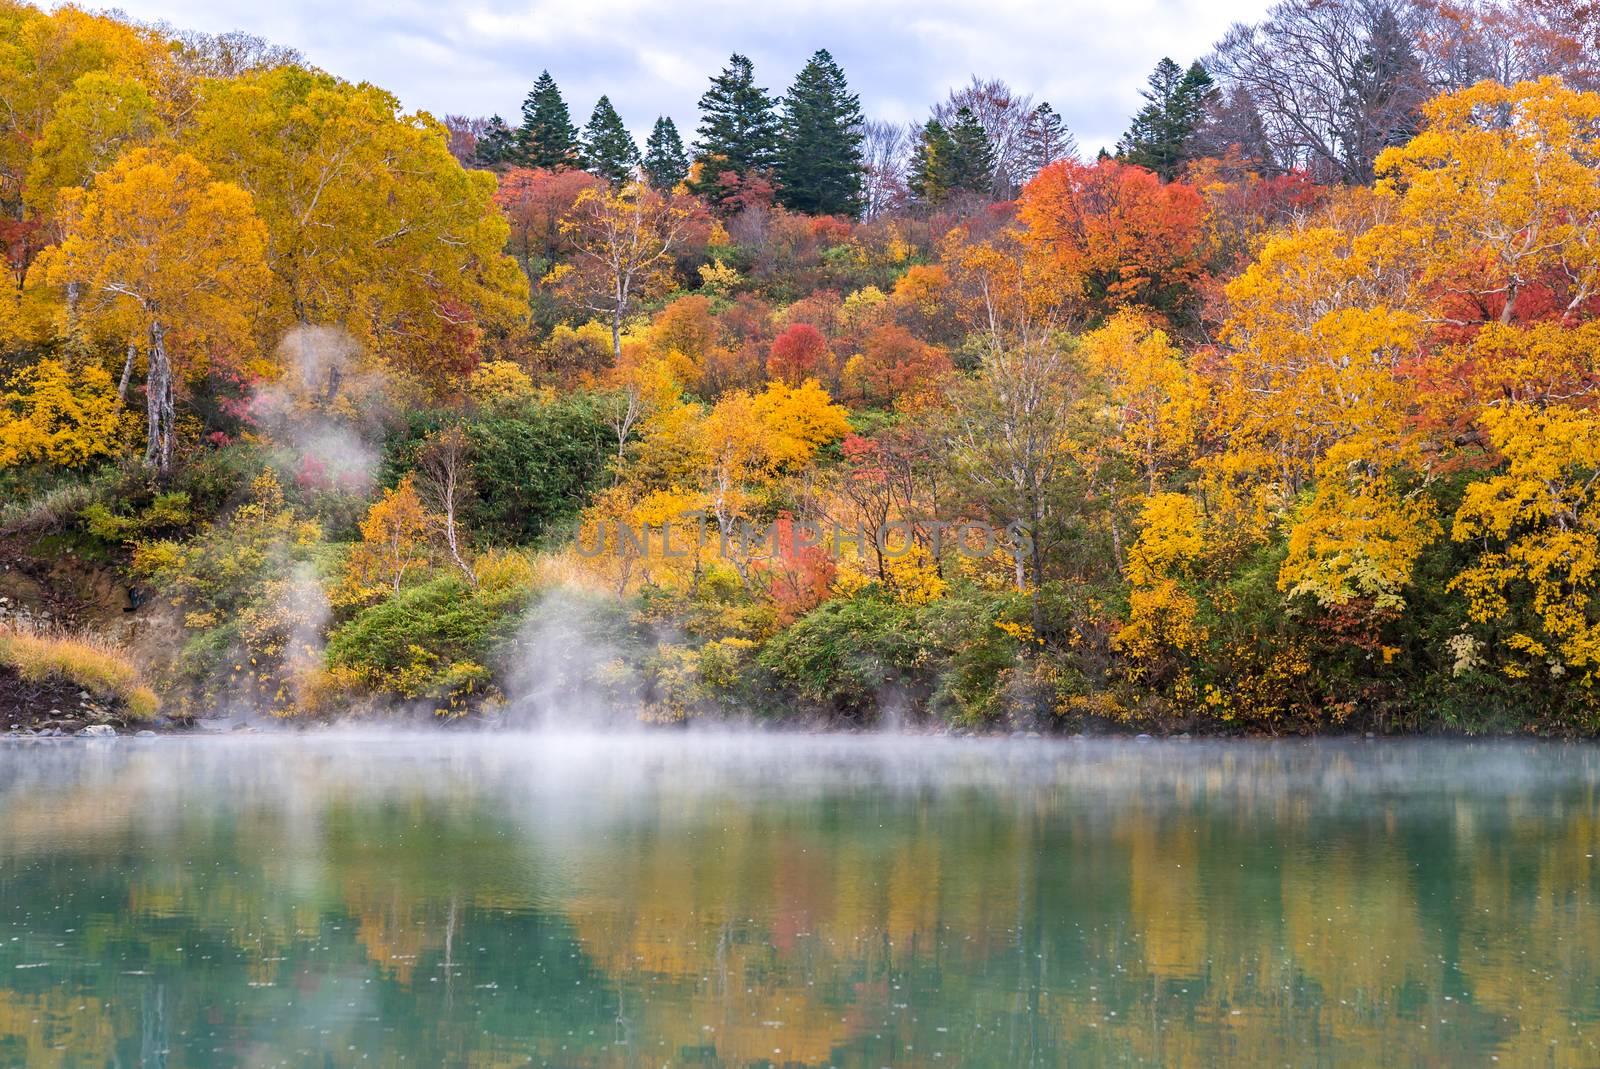 Autumn Forest onsen lake at Jigoku Numa, Hakkoda Aomori Tohoku Japan